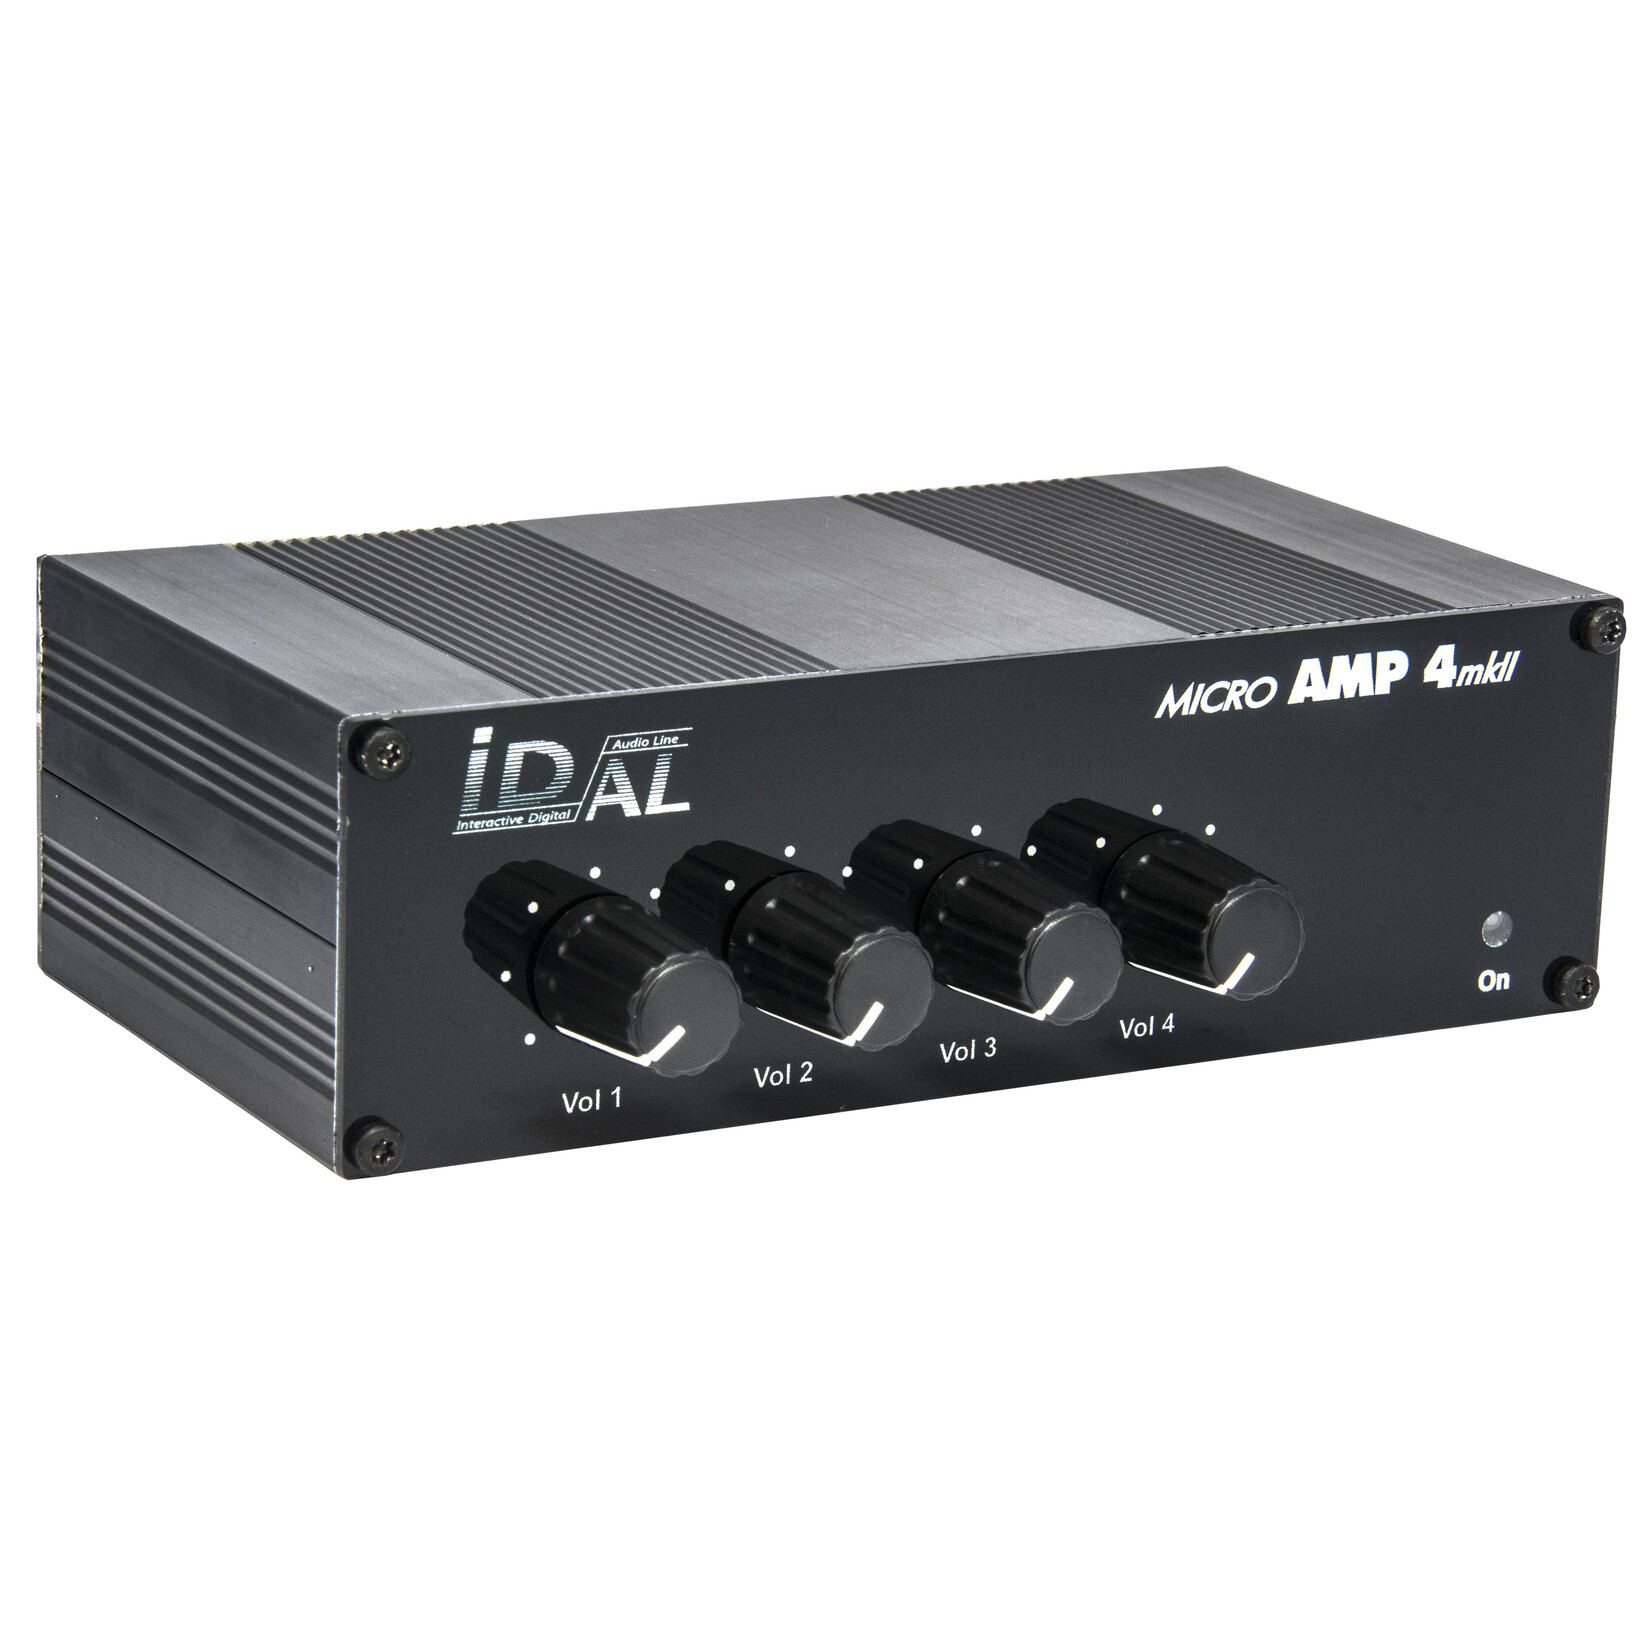 ID-AL Micro AMP 4 mkII